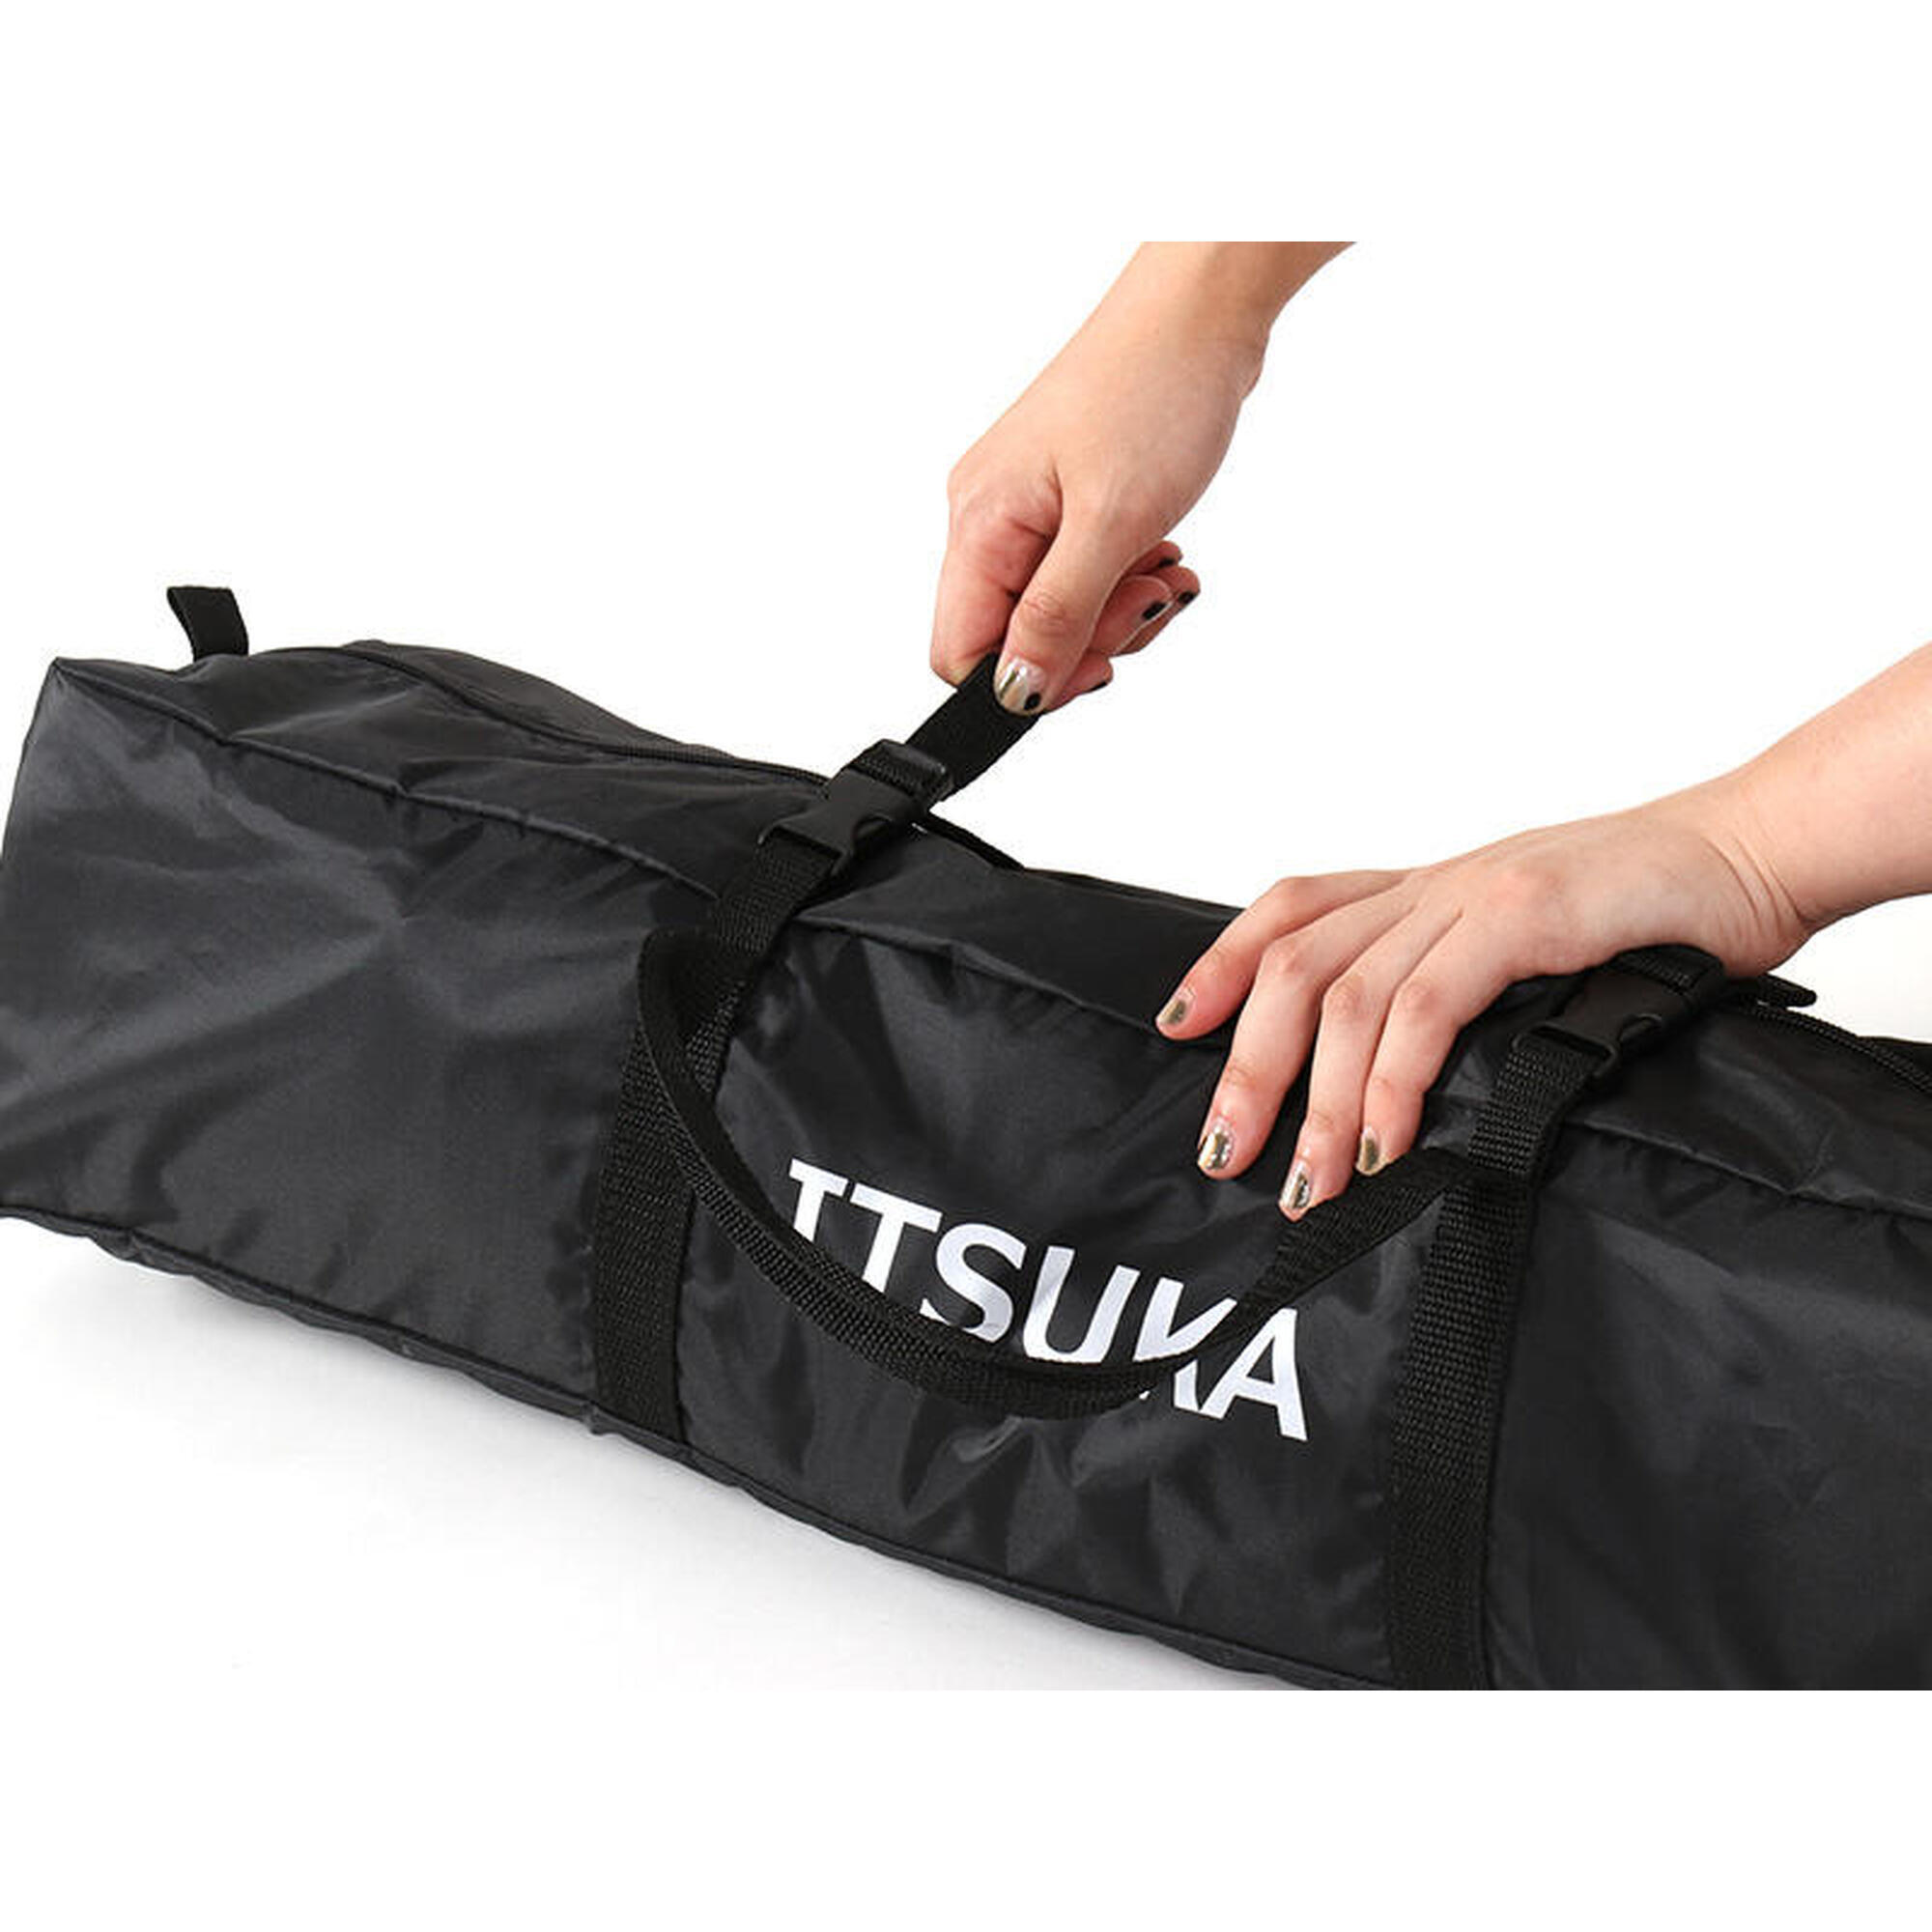 ITSUKA NO TARP TT5-631-BK Camping Tarps - Black